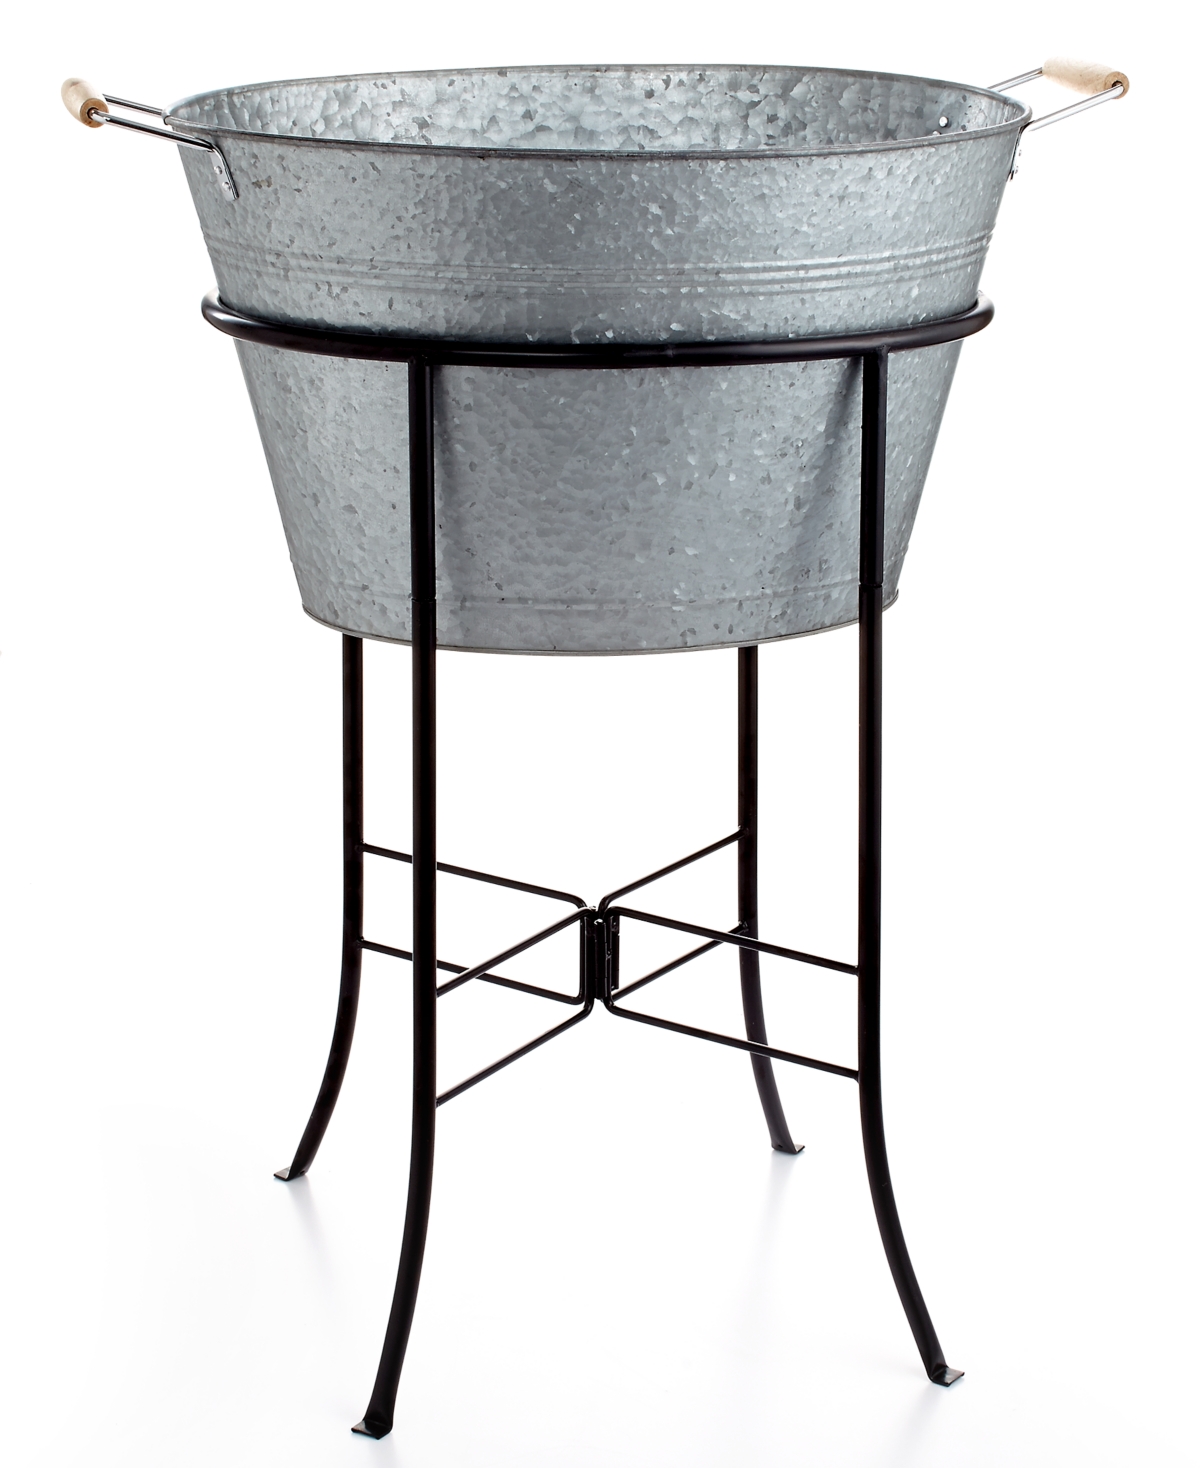 Artland Masonware Galvanized Tin Party Tub with Stand